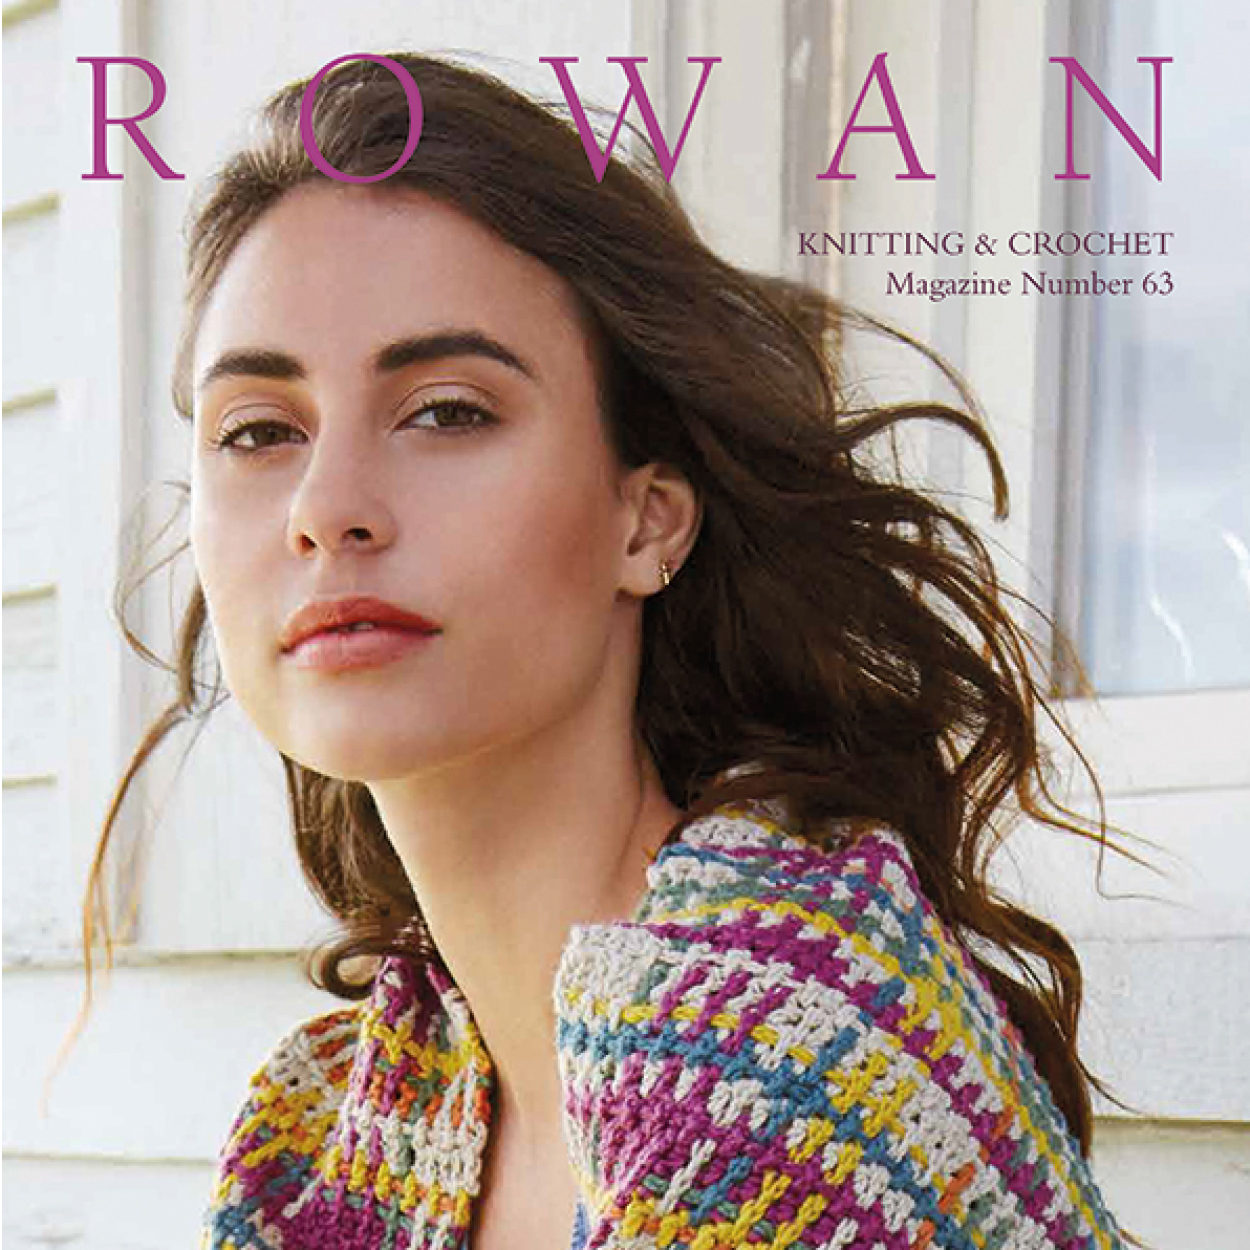 Rowan Knitting & Crochet Magazine No. 63